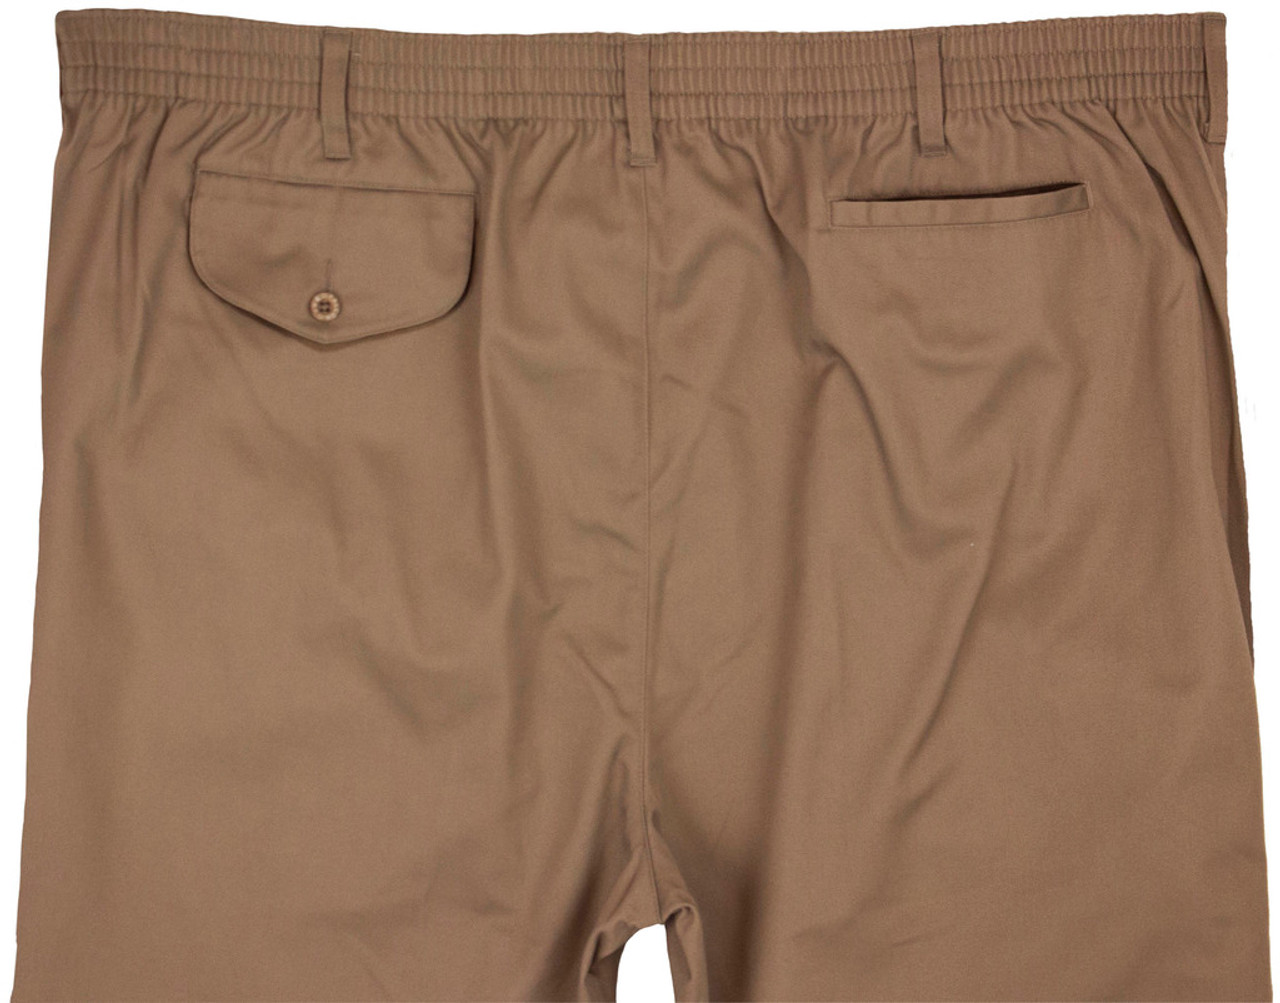 Big & Tall Men's Falcon Bay Casual Denim Pants FULL ELASTIC Waist Sizes 44-66